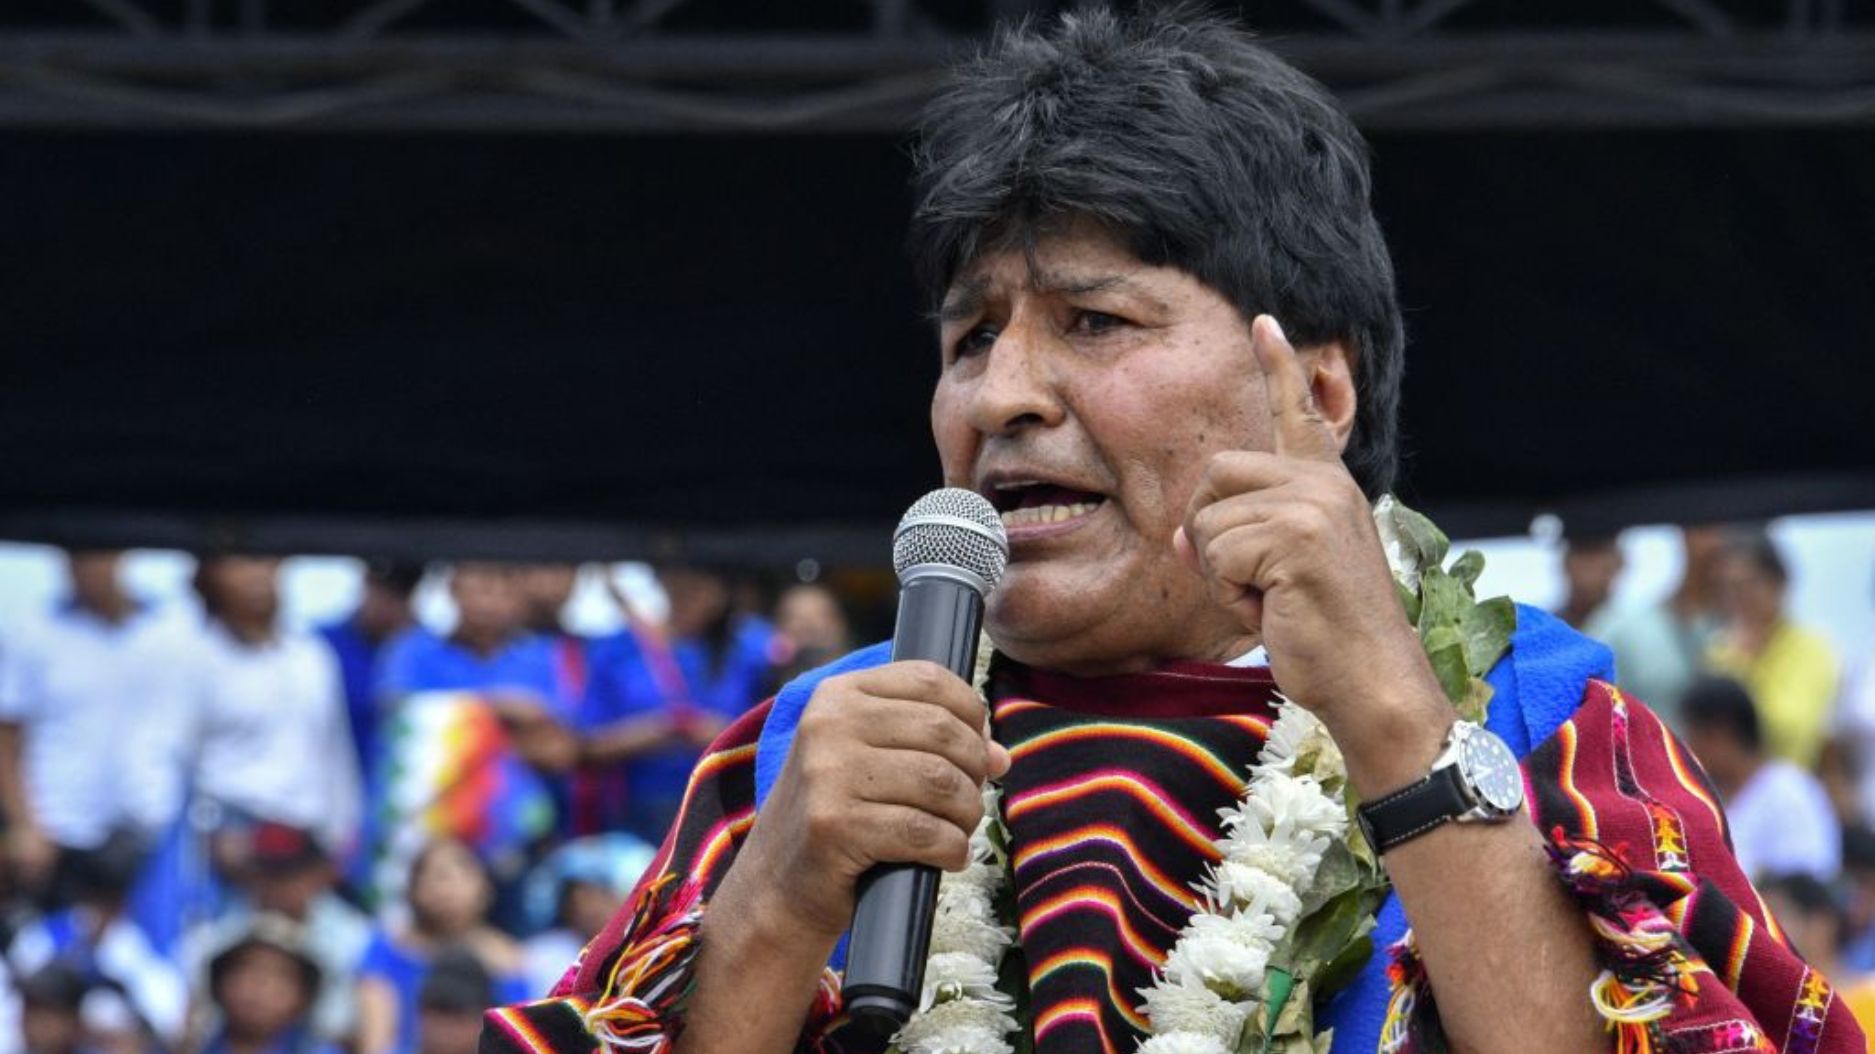 Peru judge upholds Evo Morales' entry ban